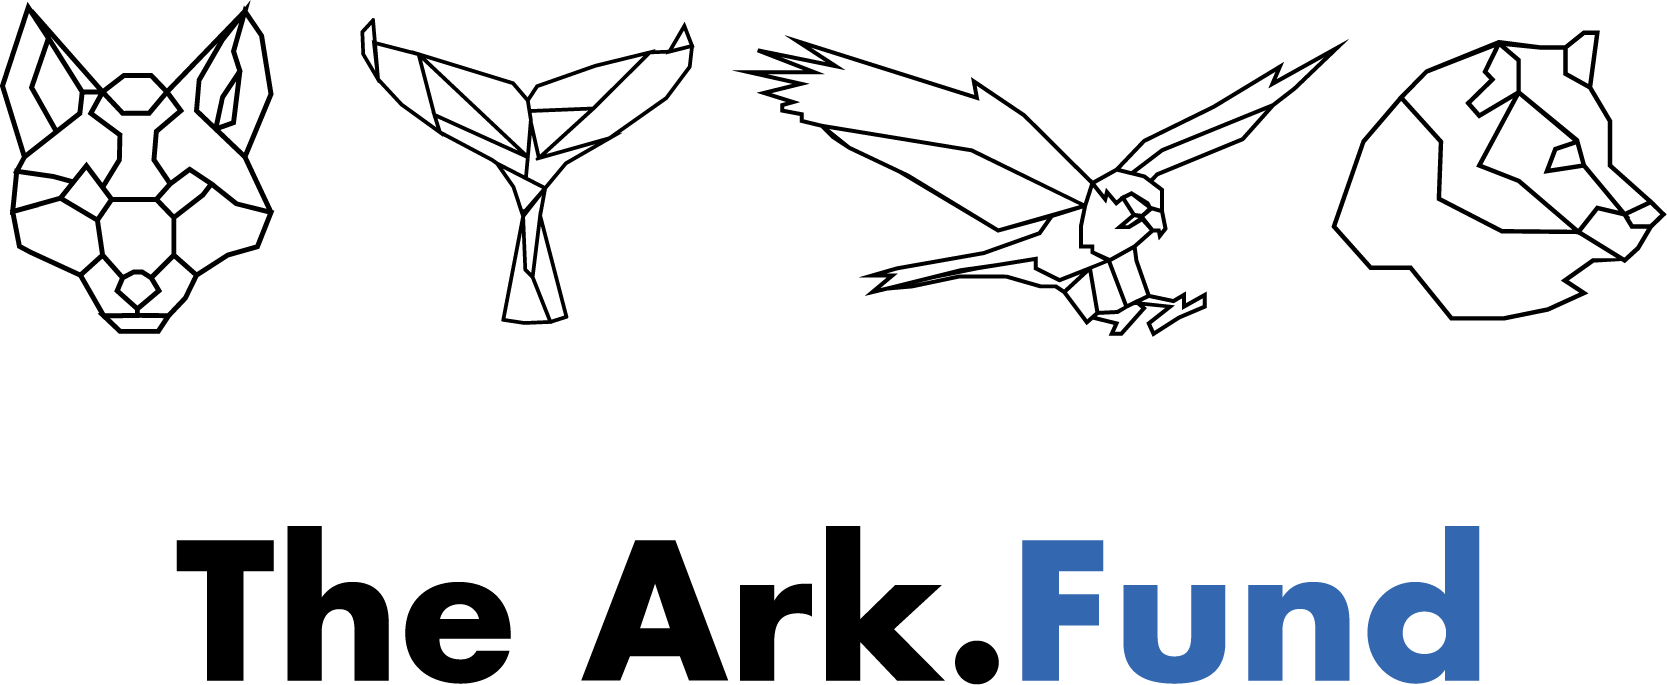 The Ark Fund logo